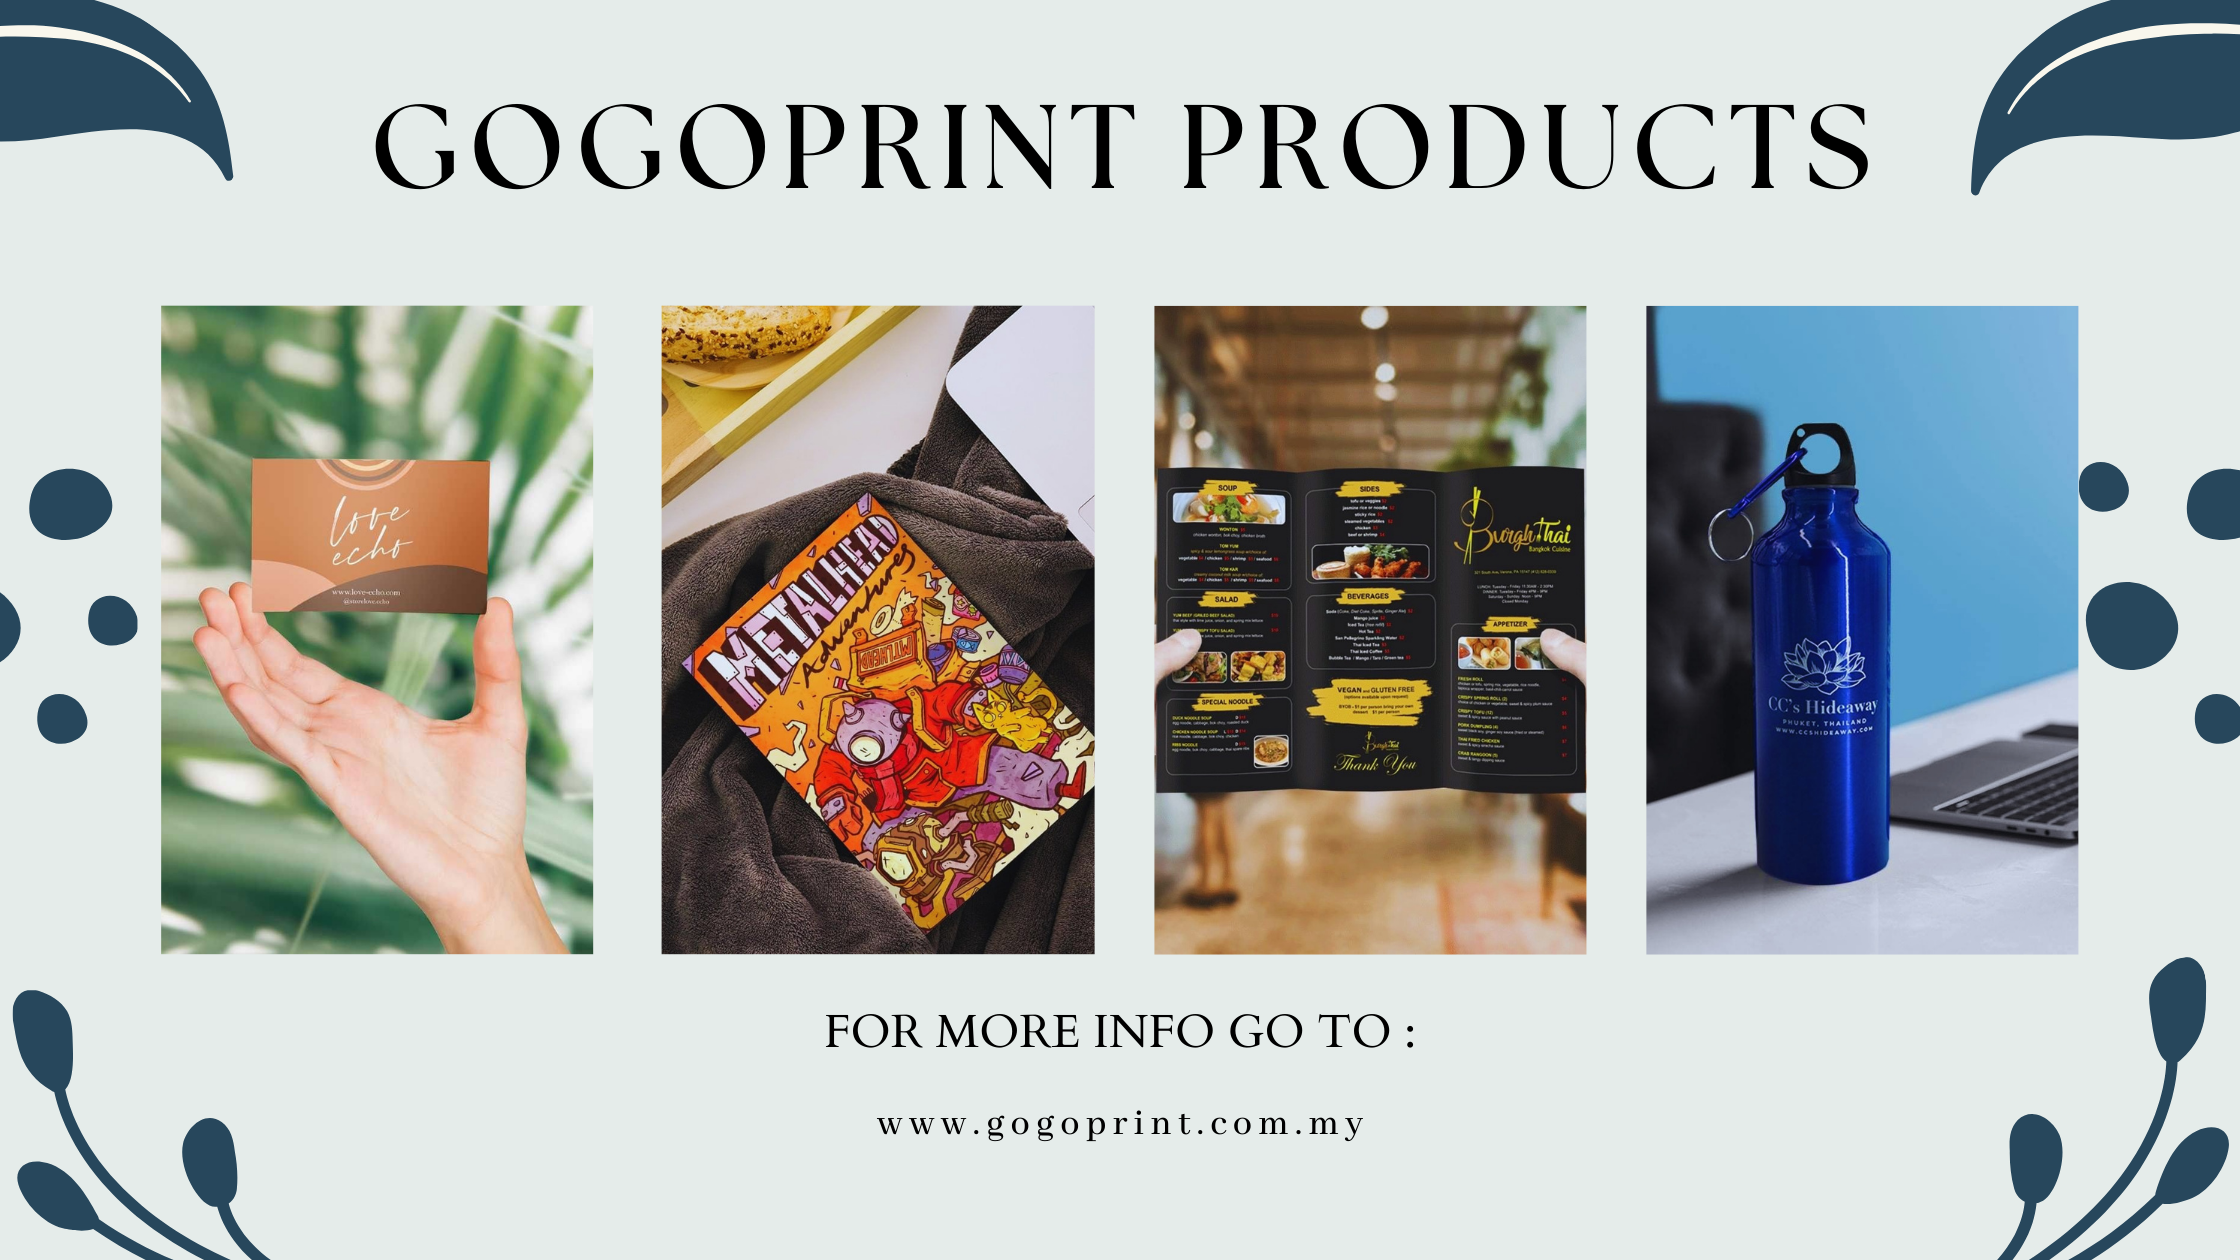 printing services available at Gogoprint